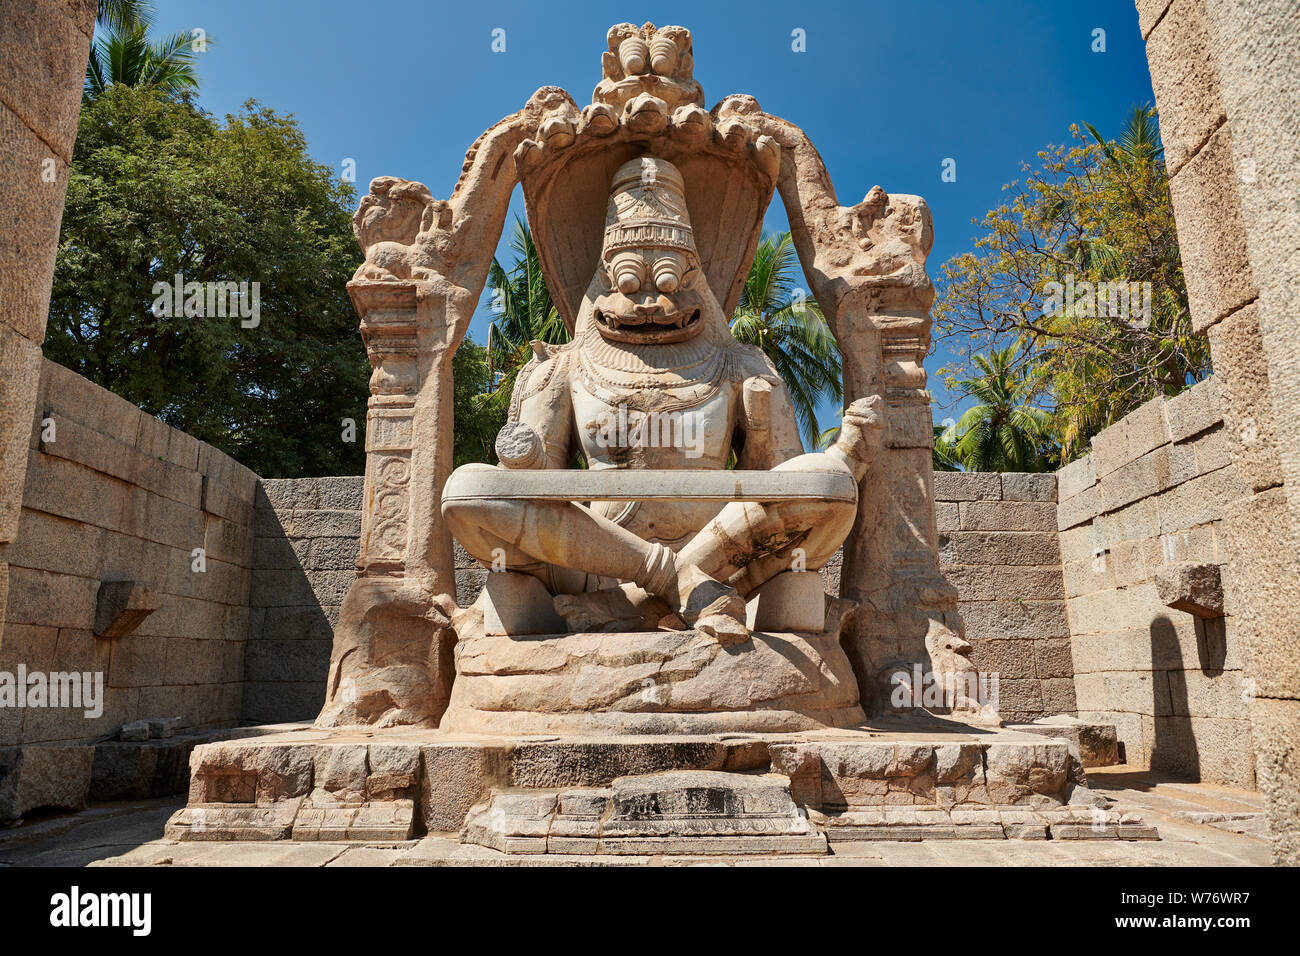 Laksmi Narasimha tempio, Yoga-Narasimha monoliti scolpiti in-situ., Hampi, UNESCO sito heritge, Karnataka, India Foto Stock